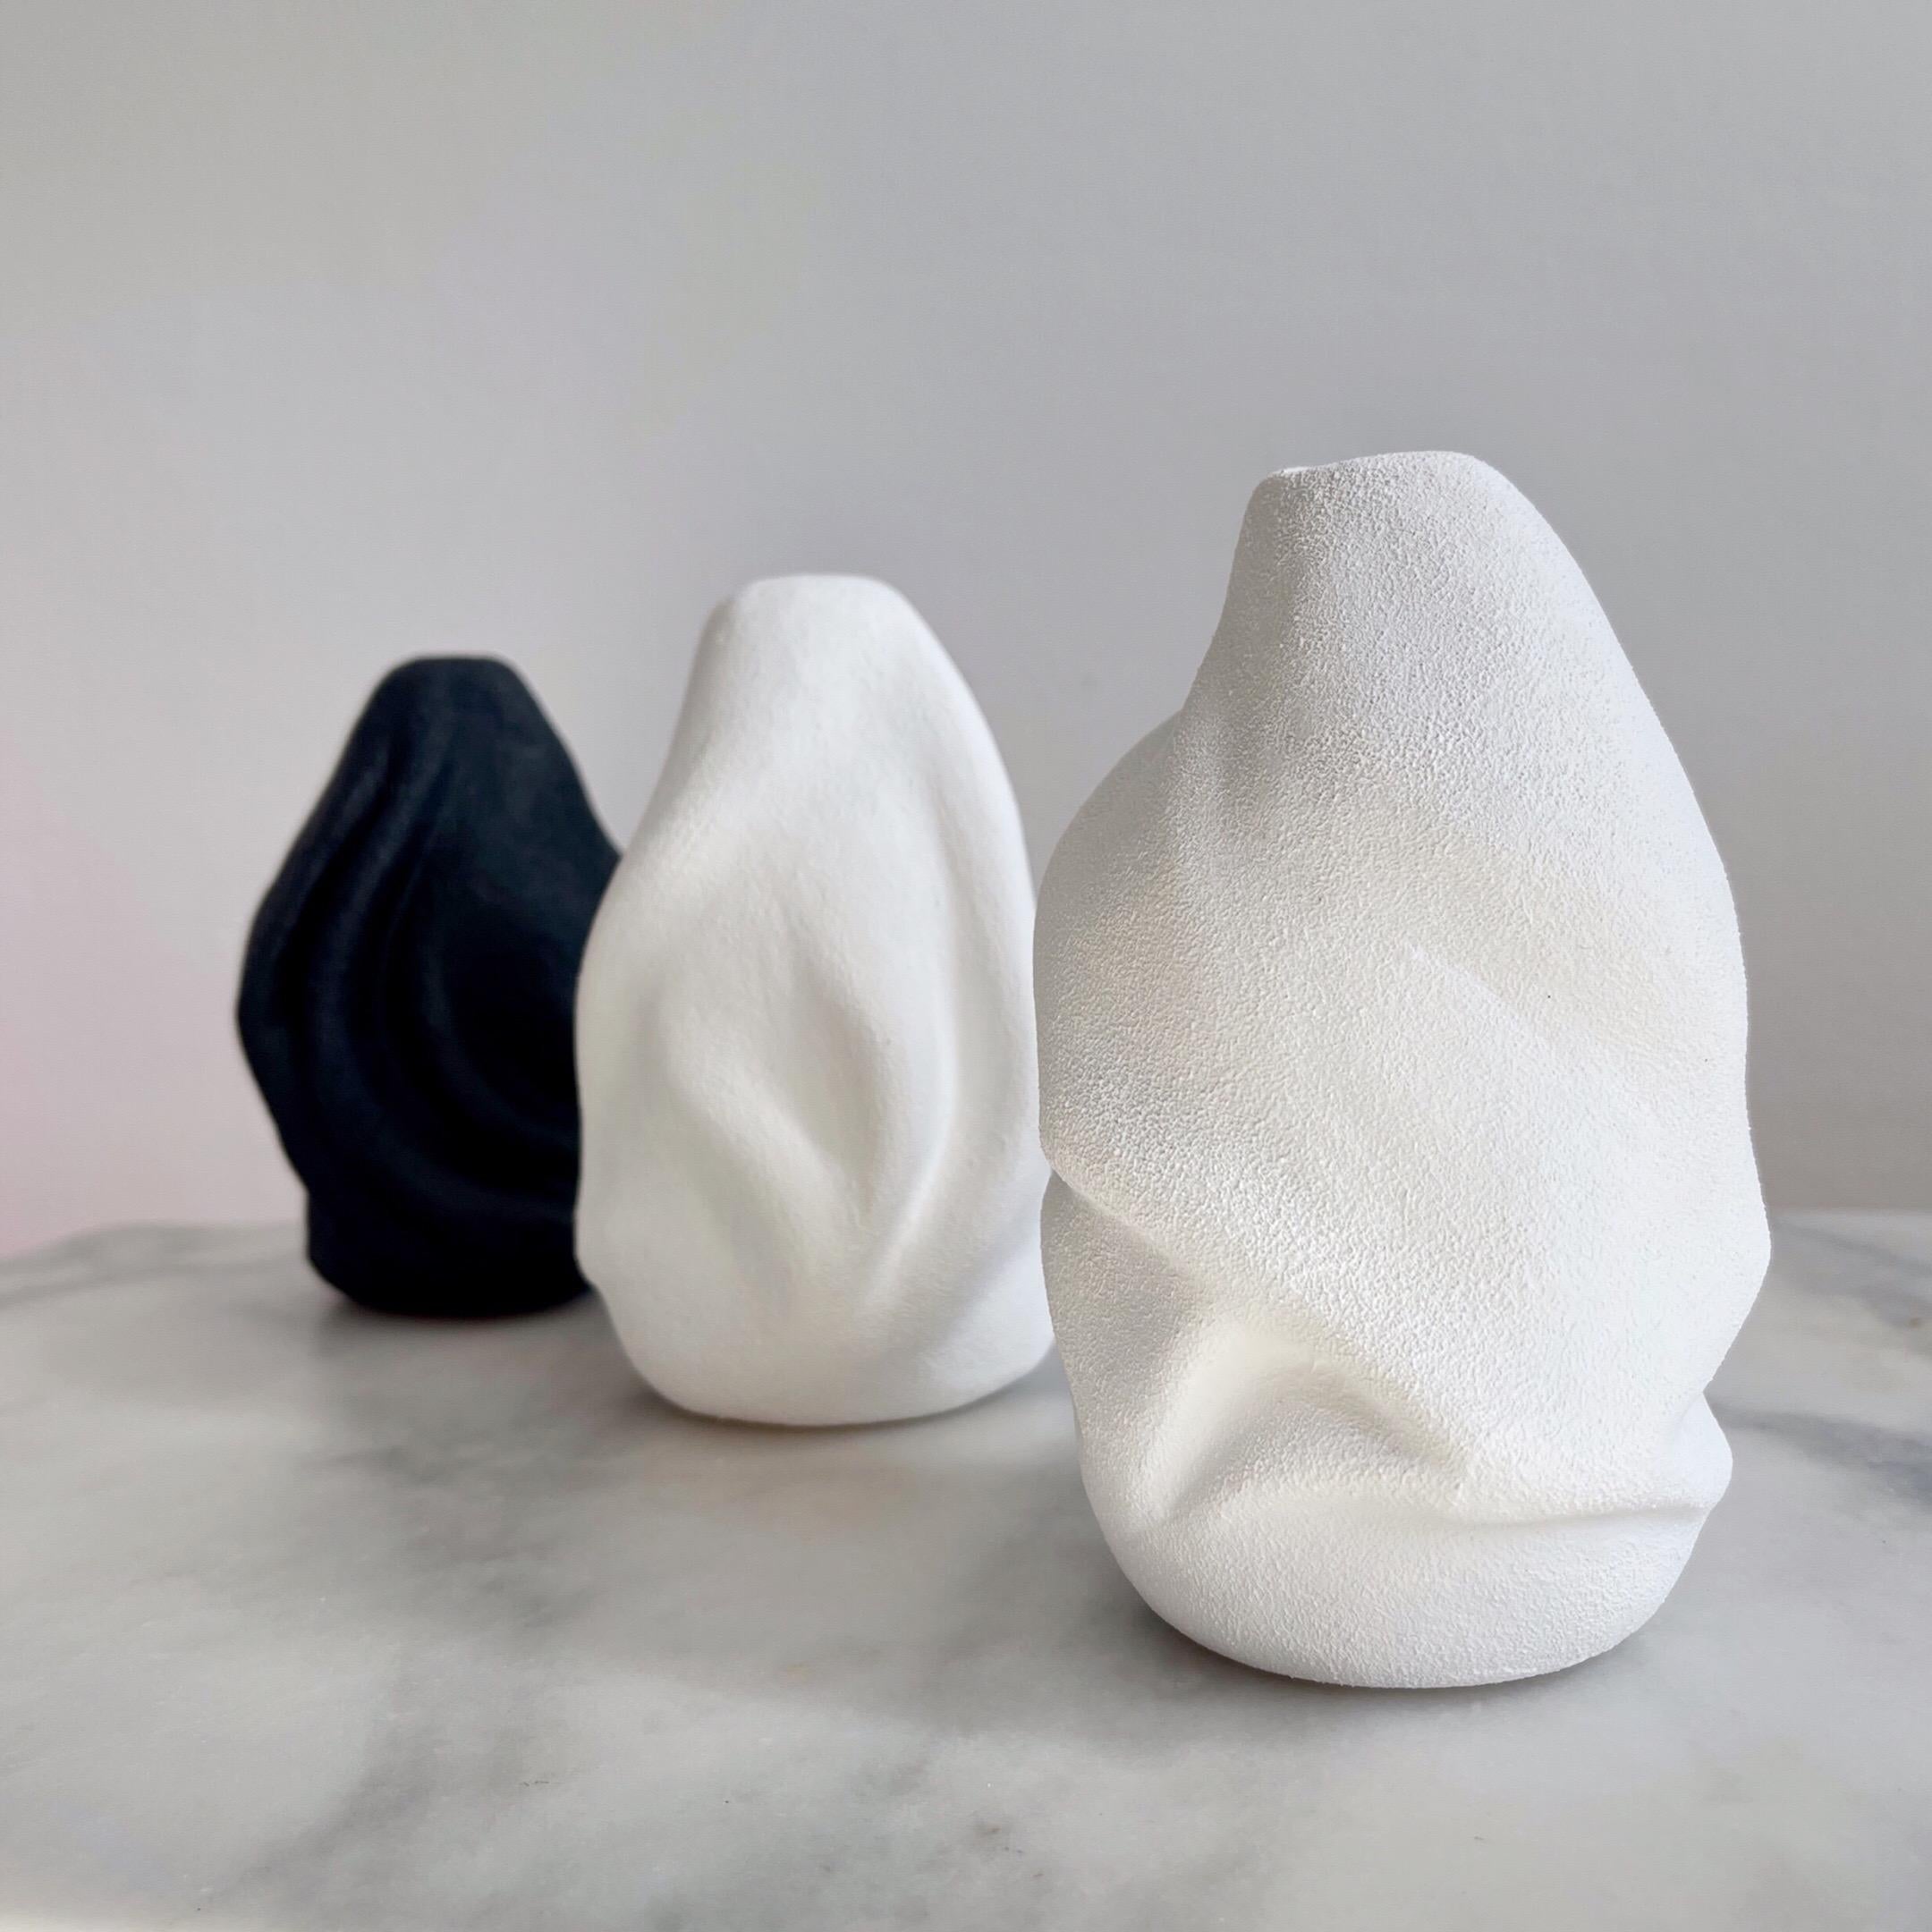 Lesia Danilina Abstract Sculpture - Set Wabi-Vases 1, 2, 3 clay, plaster, glass, ceramics, 3D art, textured art